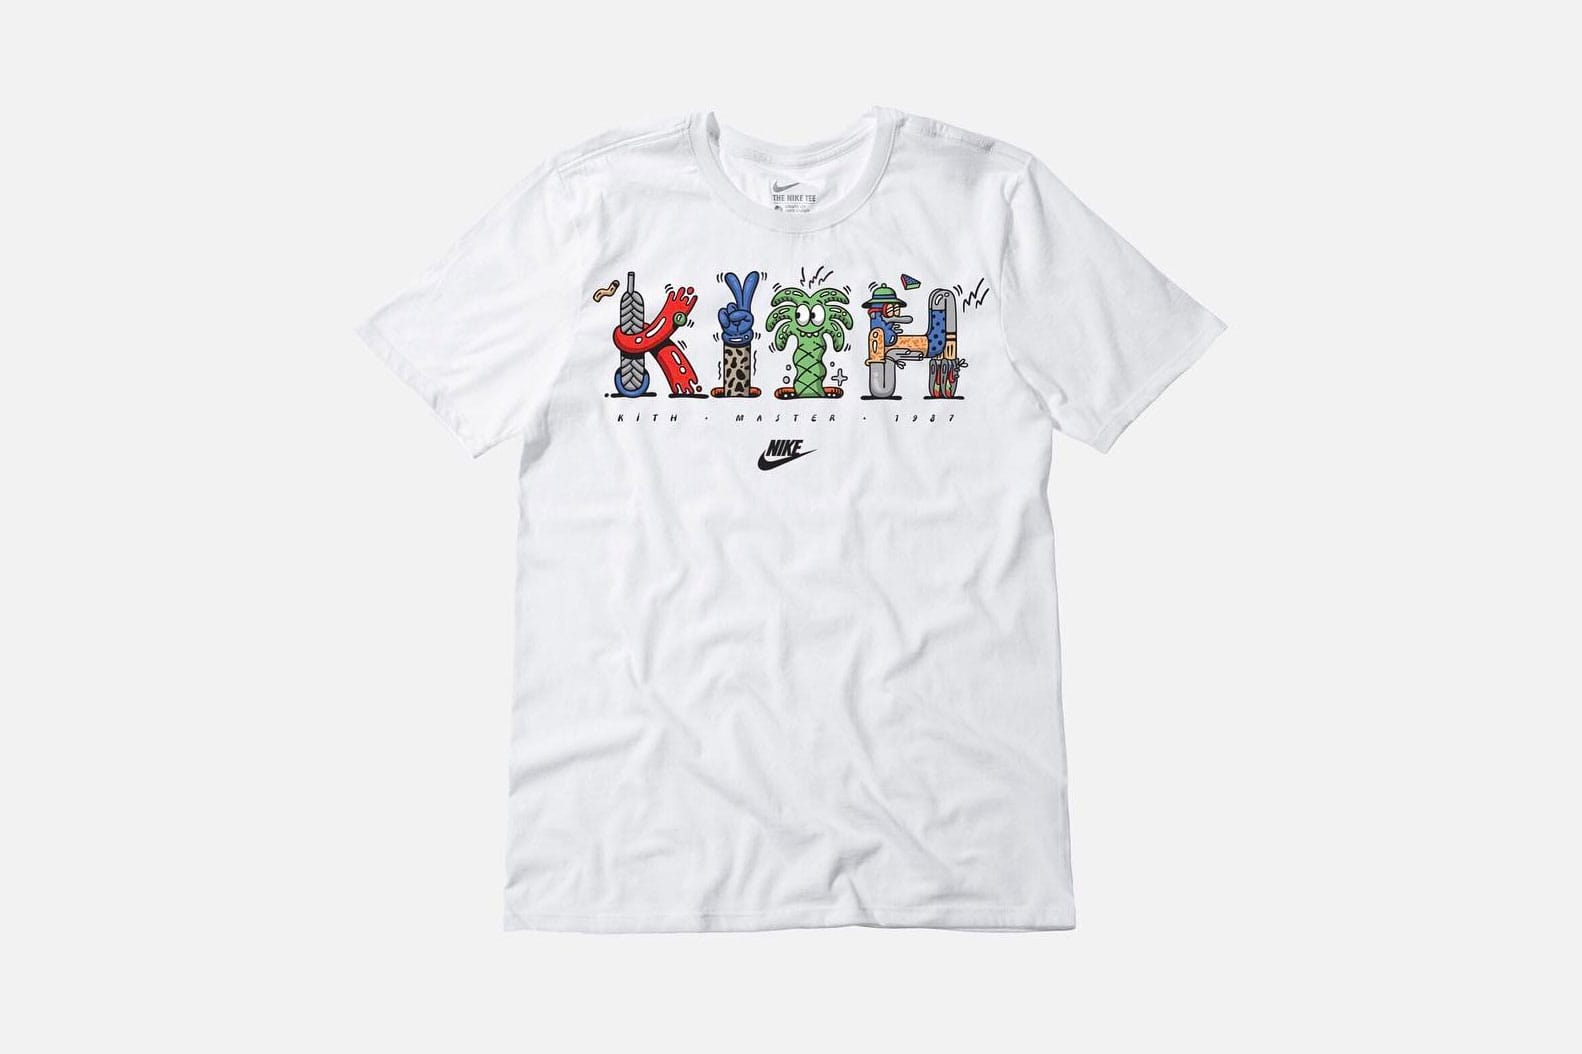 Steve Harrington x KITH x Nike T-Shirt Preview | Hypebeast